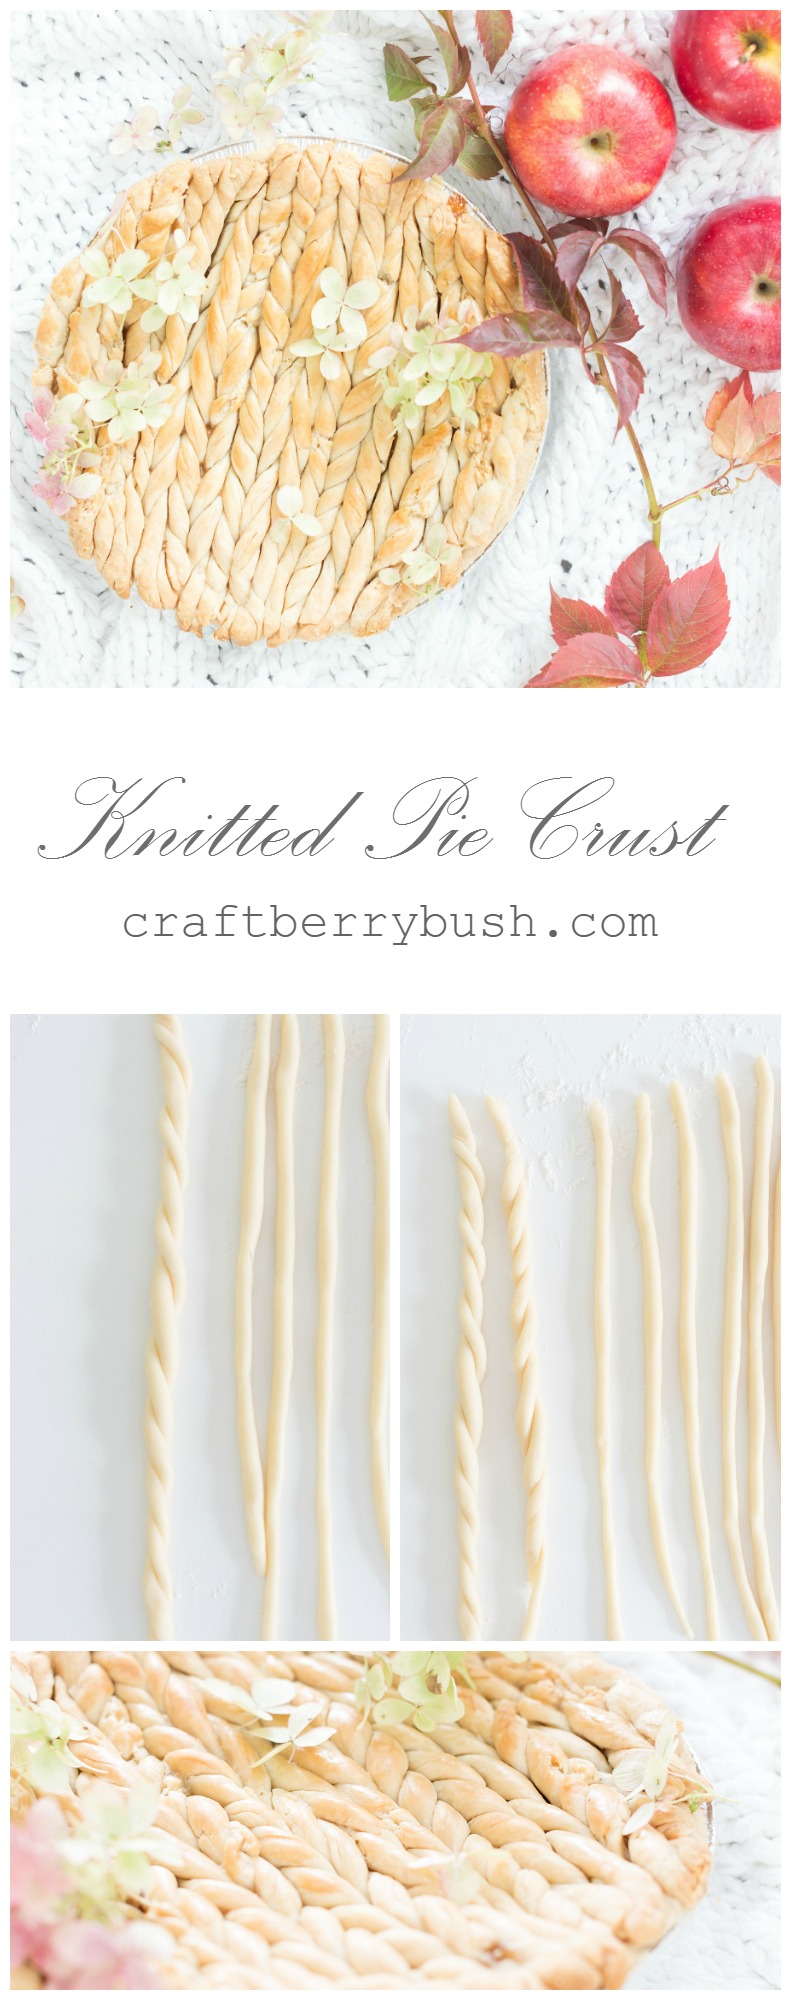 Knitted pie crust tutorial by Craftberrybush